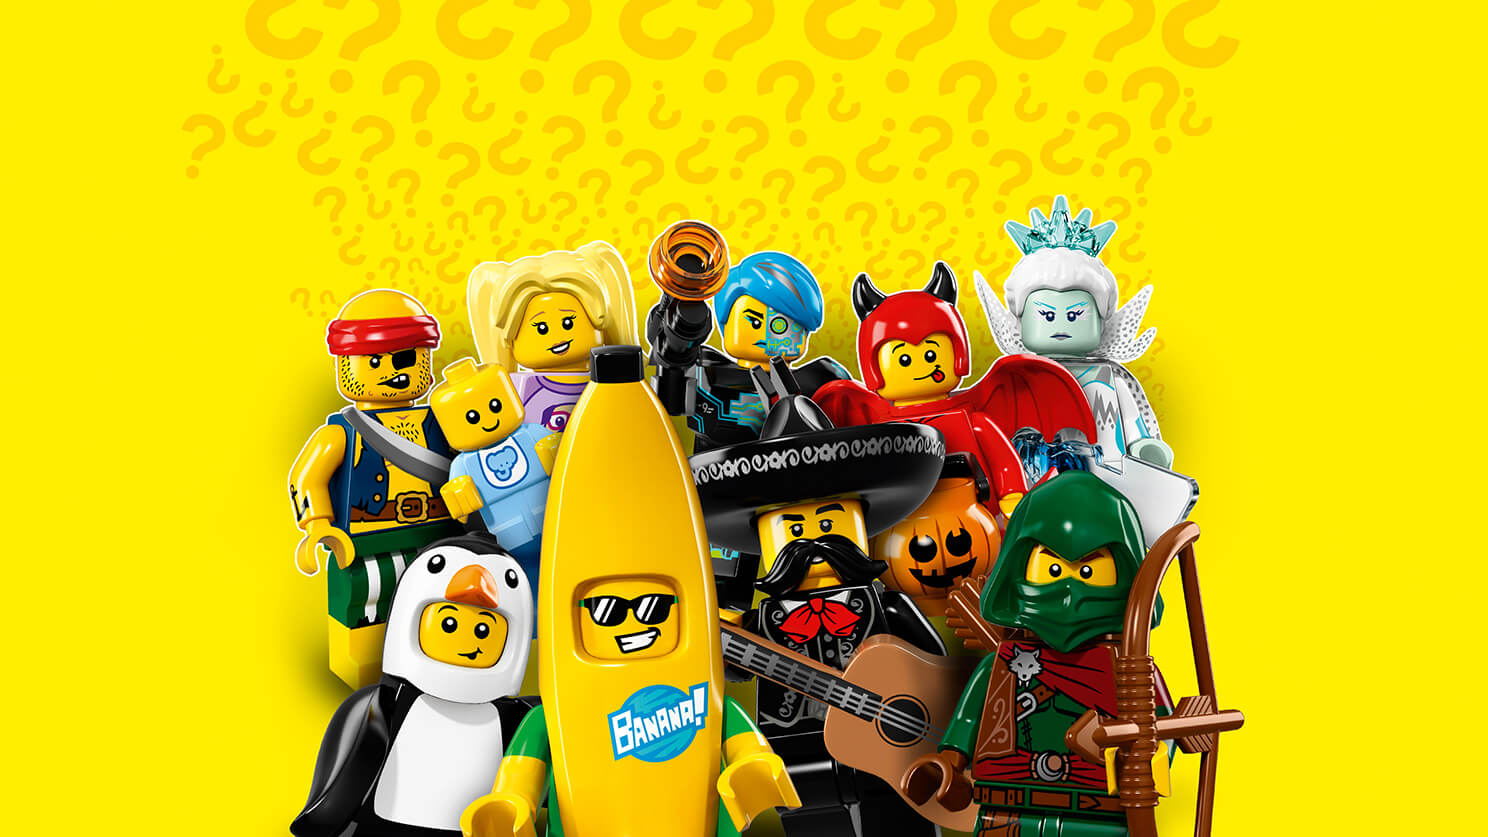 LEGO 71013 Minifiguren Serie 16 Figuren zur Auswahl 